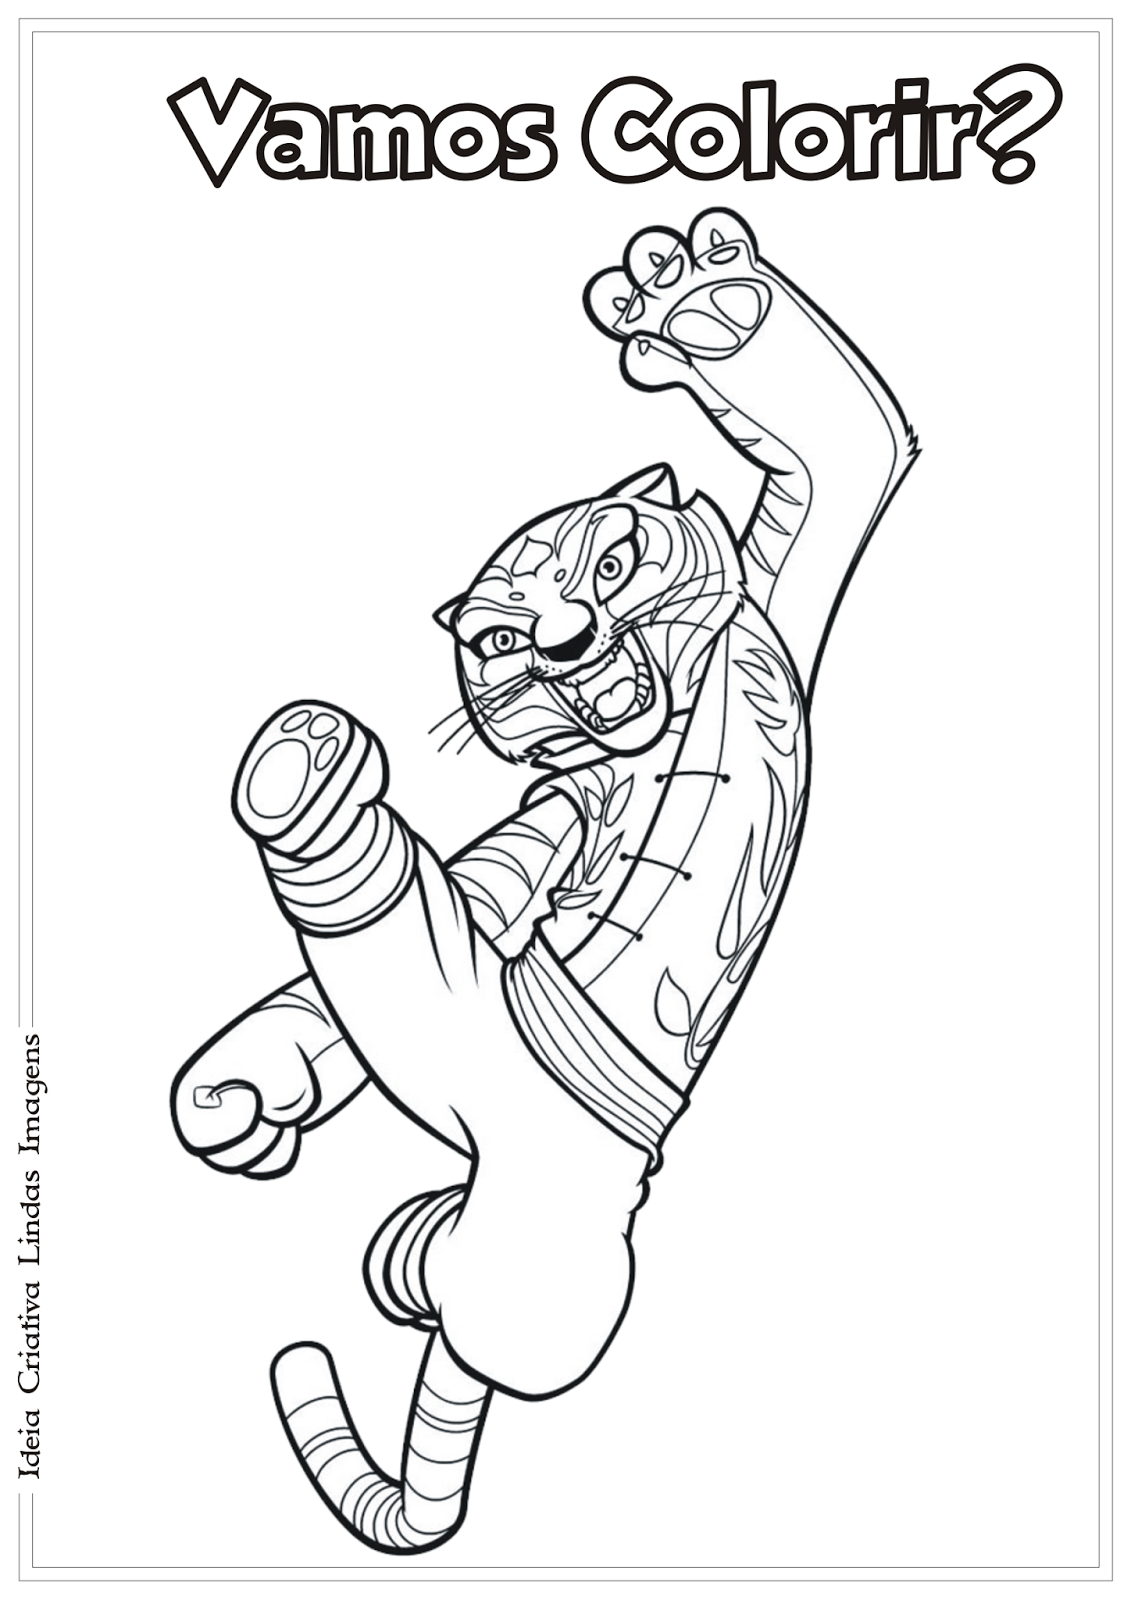 Imagem de panda Kung Fu para imprimir e colorir - Kung Fu panda